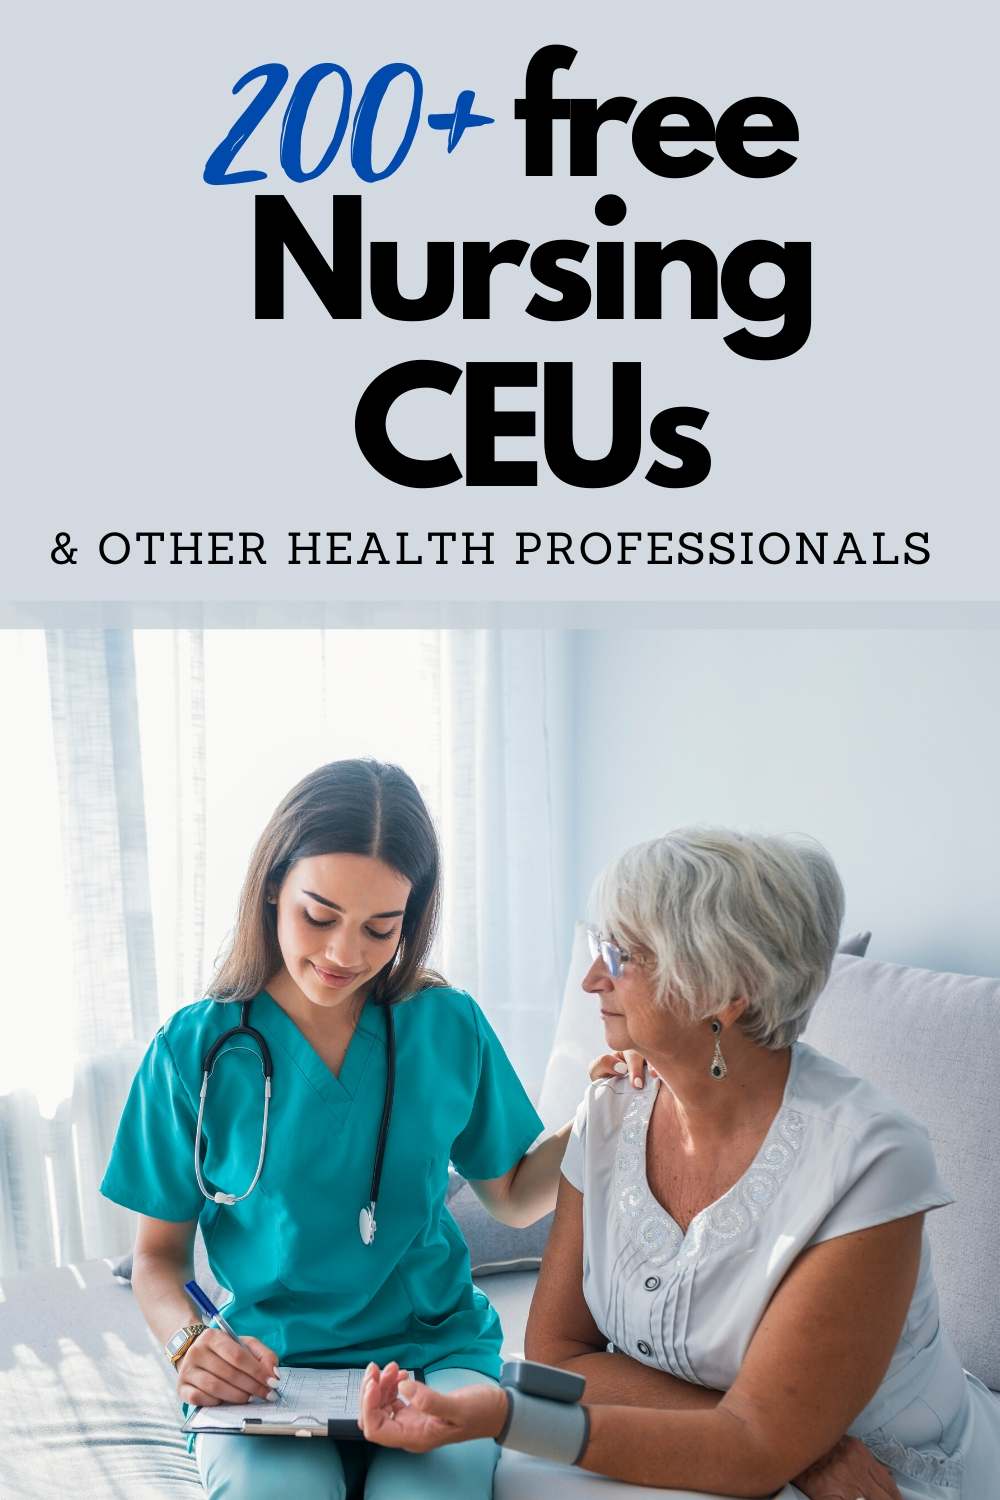 230+ Free Nursing CEUs & Other Health Professionals